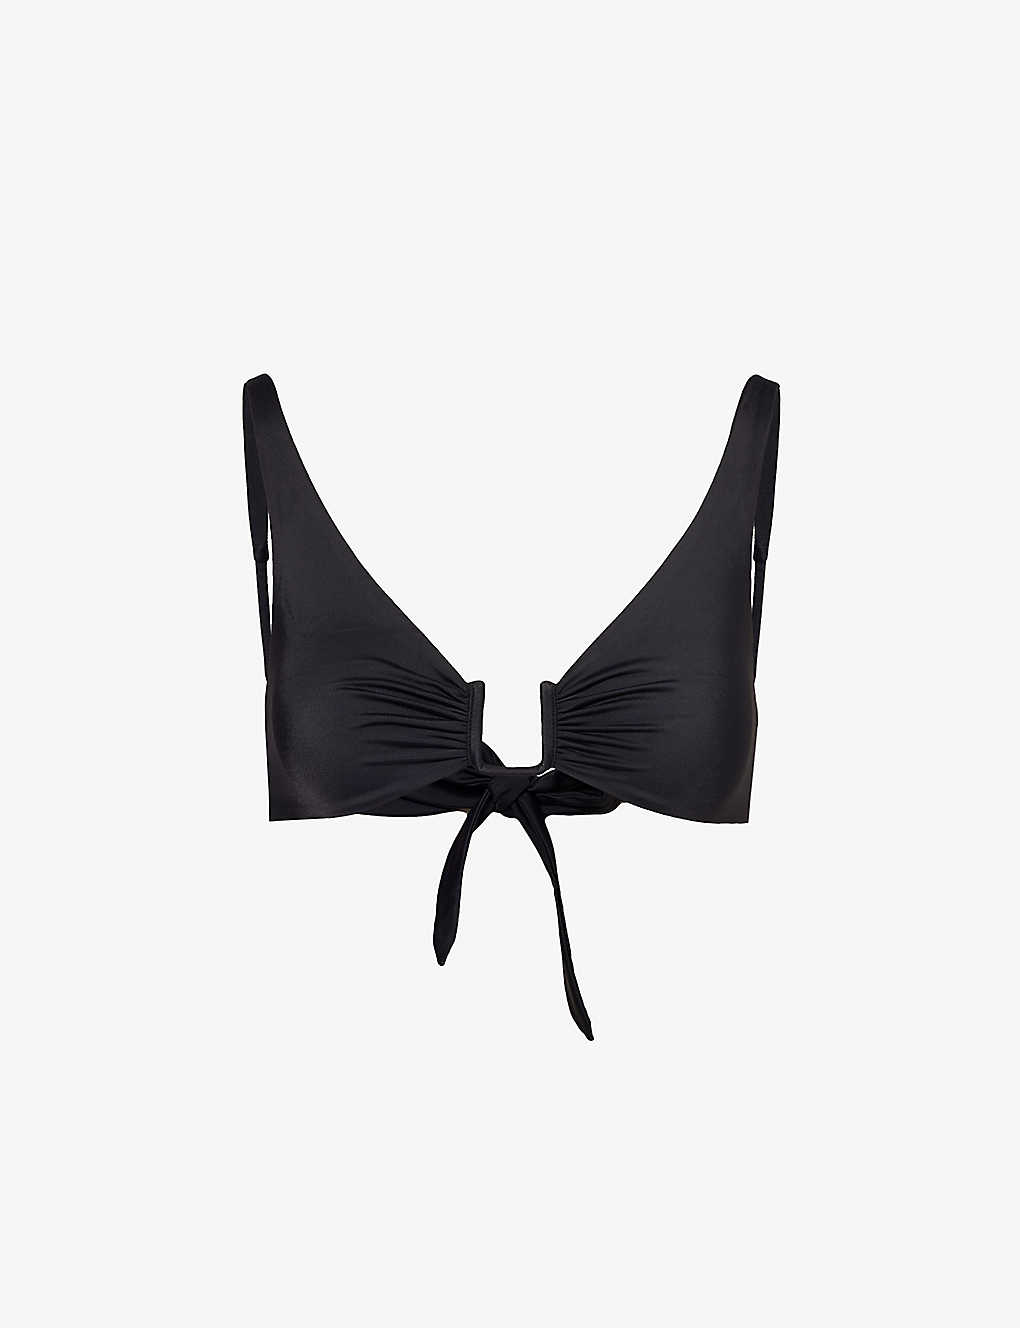 Away That Day Womens Black Palma Recycled Polyamide-blend Bikini Top